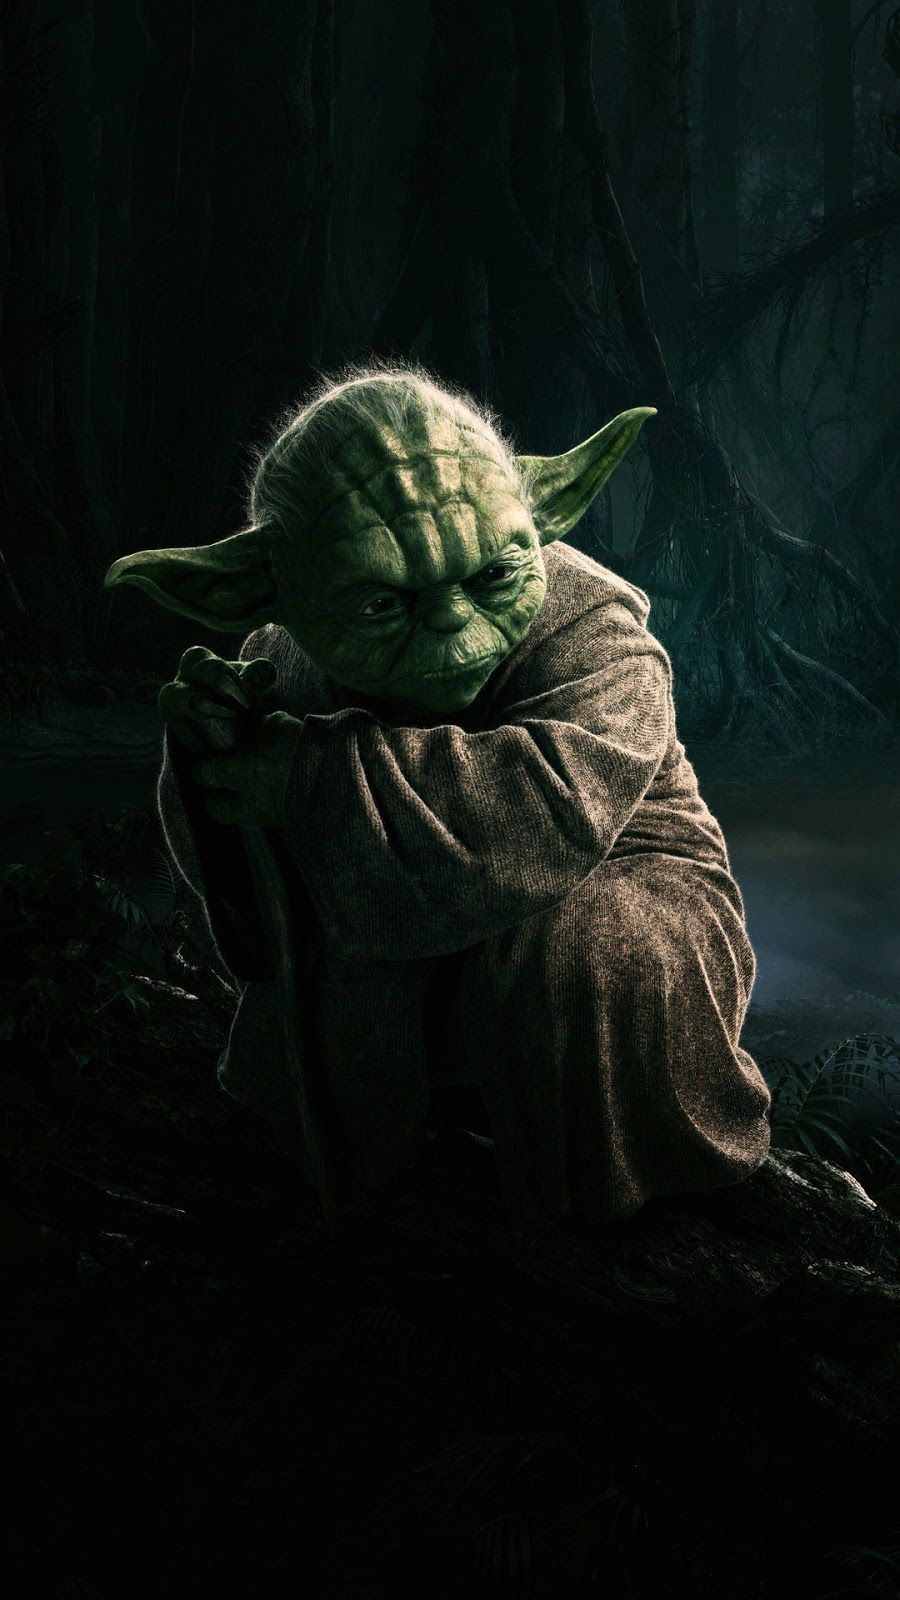 Yoda Illustration Star Wars 1080p Movie Wallpaper - HD Wallpapers ...